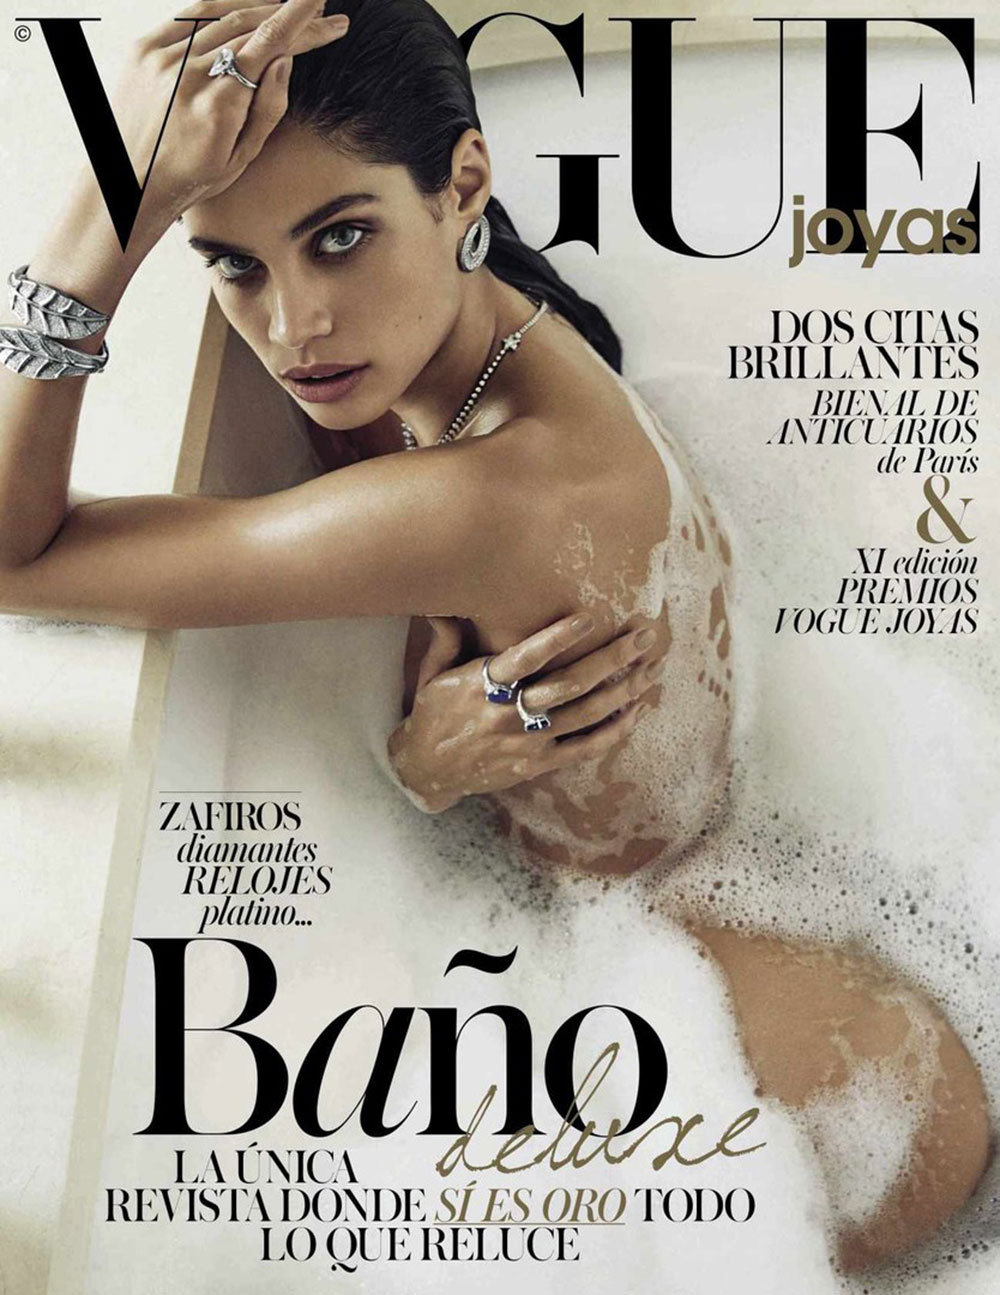 SARA-SAMPAIO-on-the-Cover-Vogue-Joyas-Magazine-Spain-December-2014-Issue-1.jpg